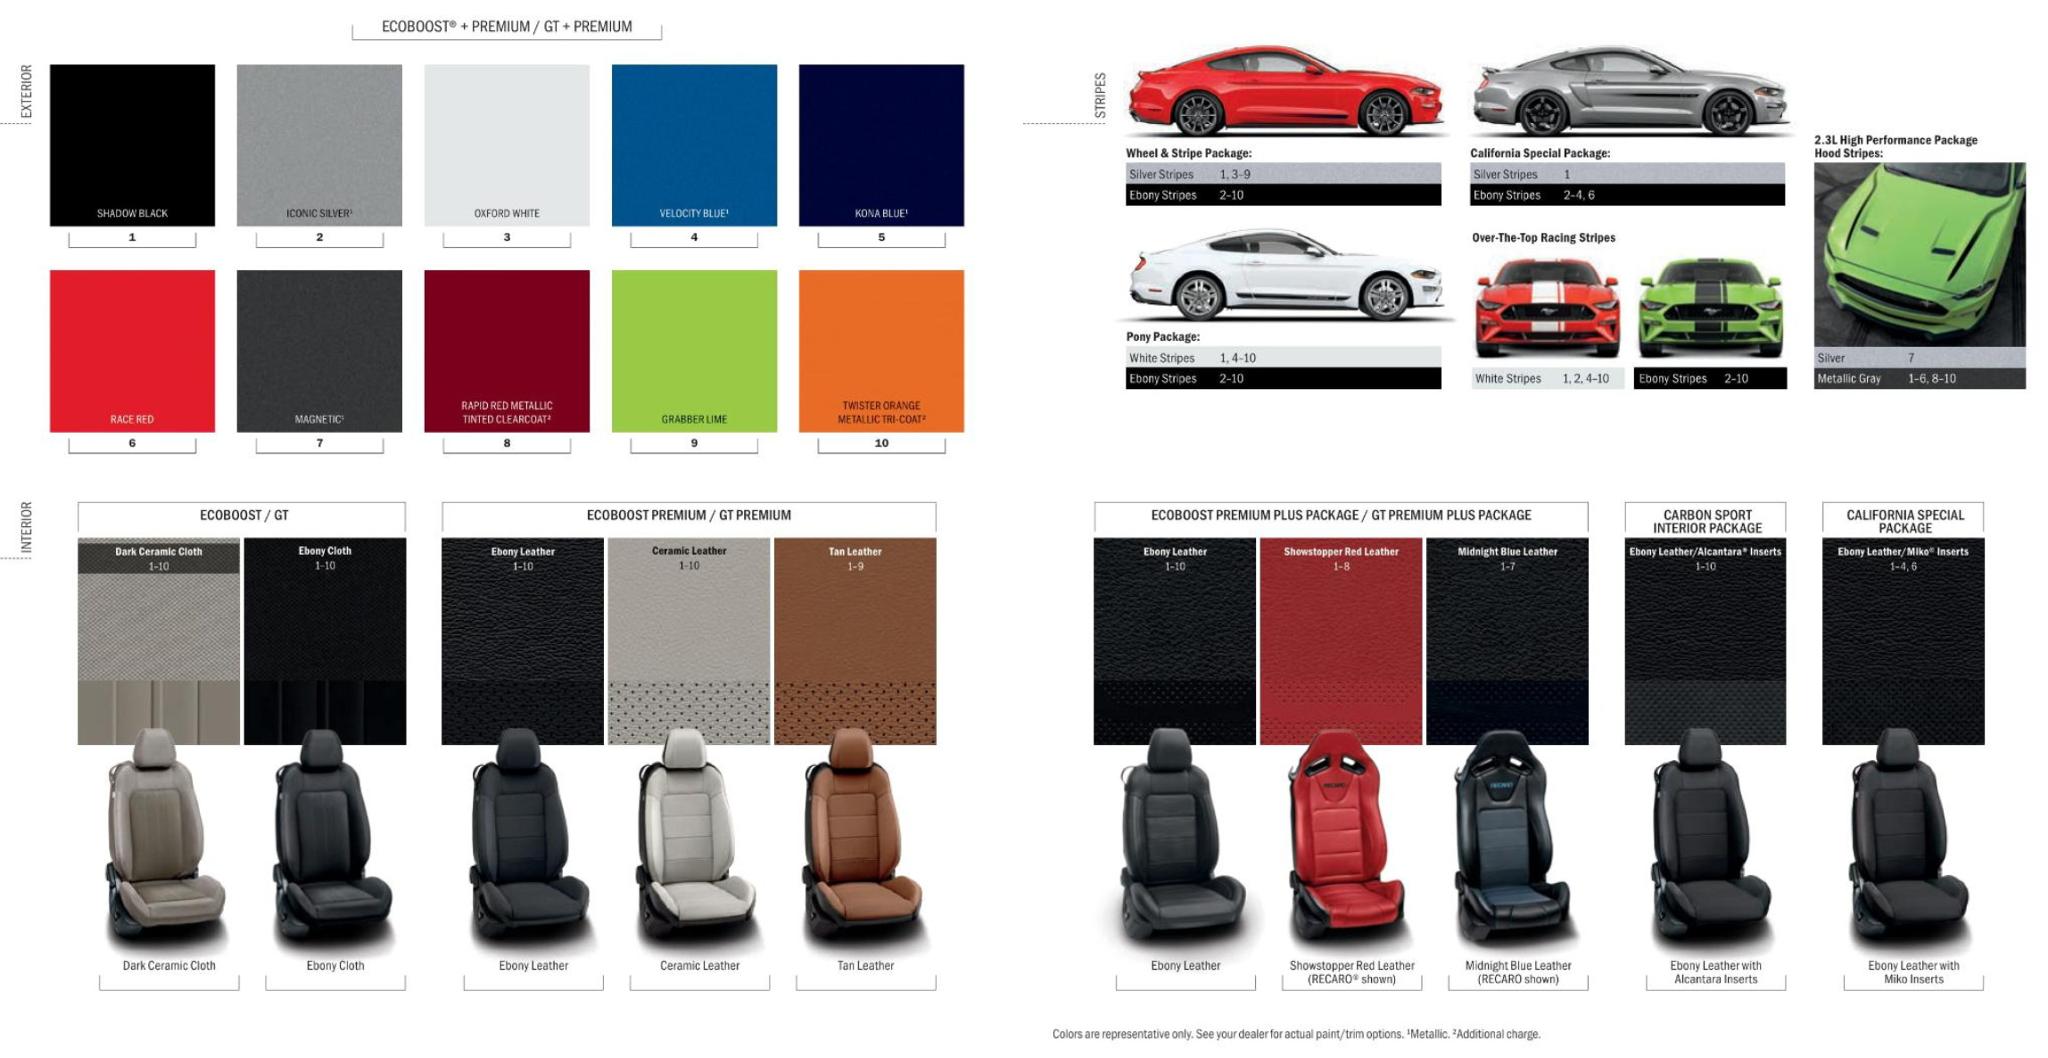 All 2020 Mustang Interior Options